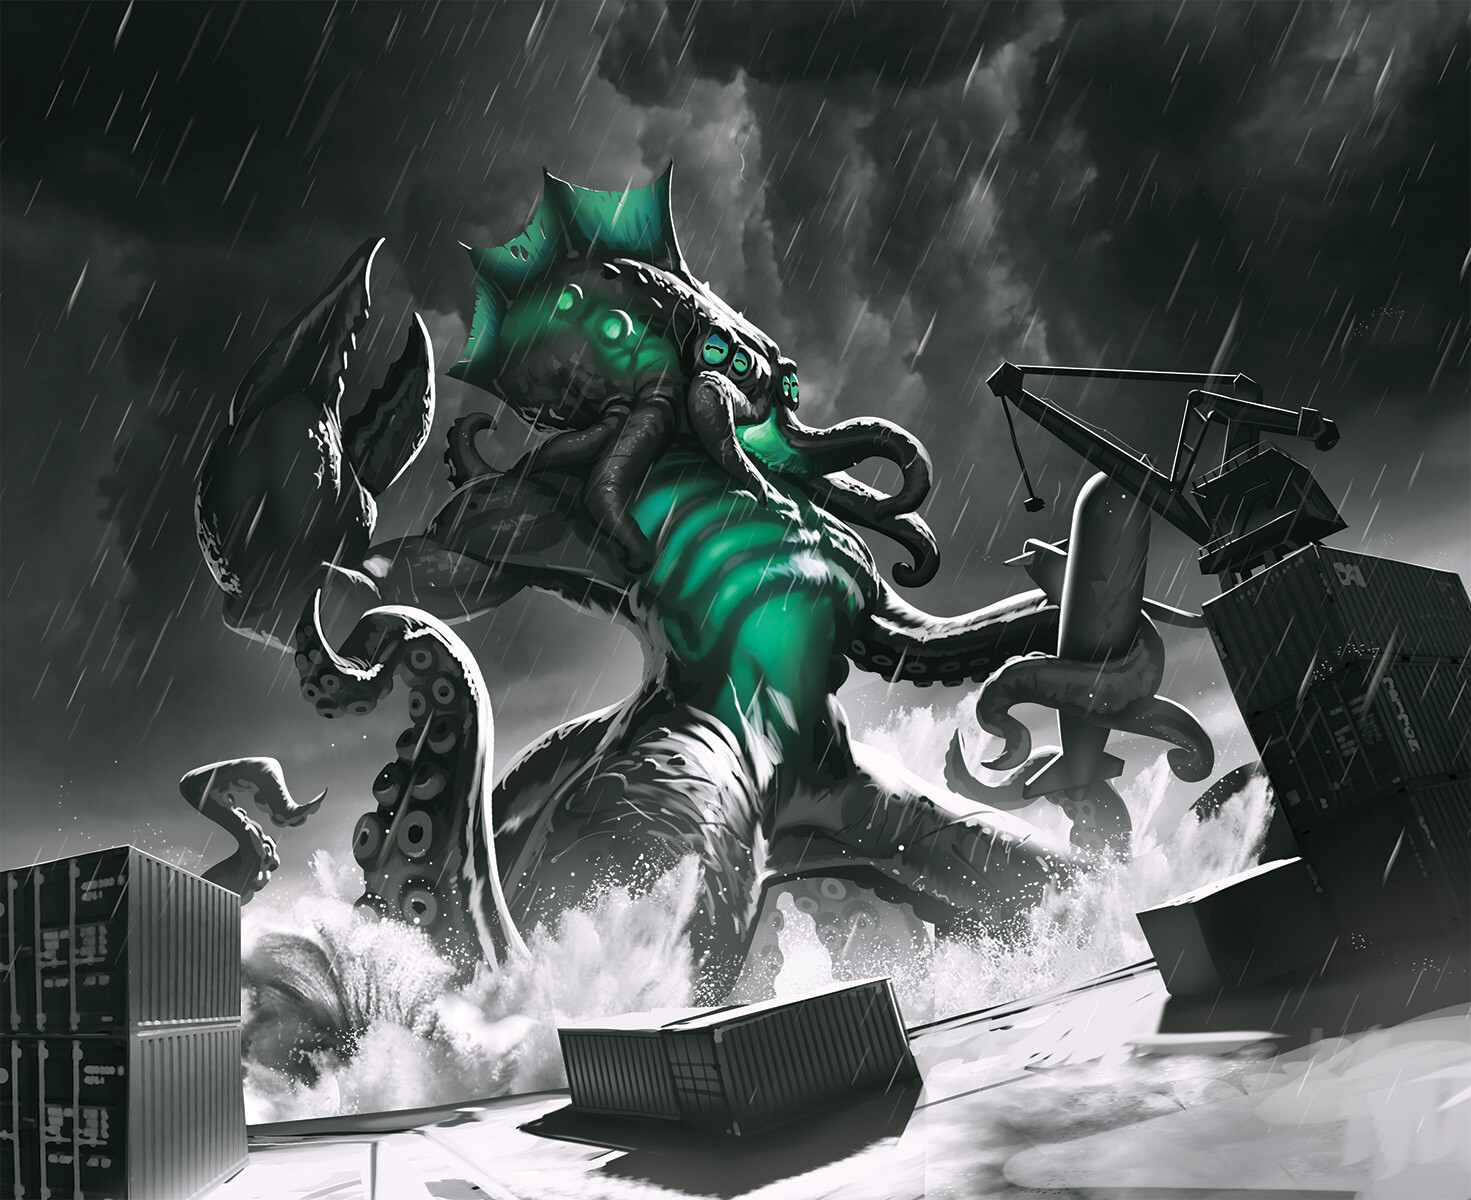 Kraken (Clash of the Titans), Villains Wiki